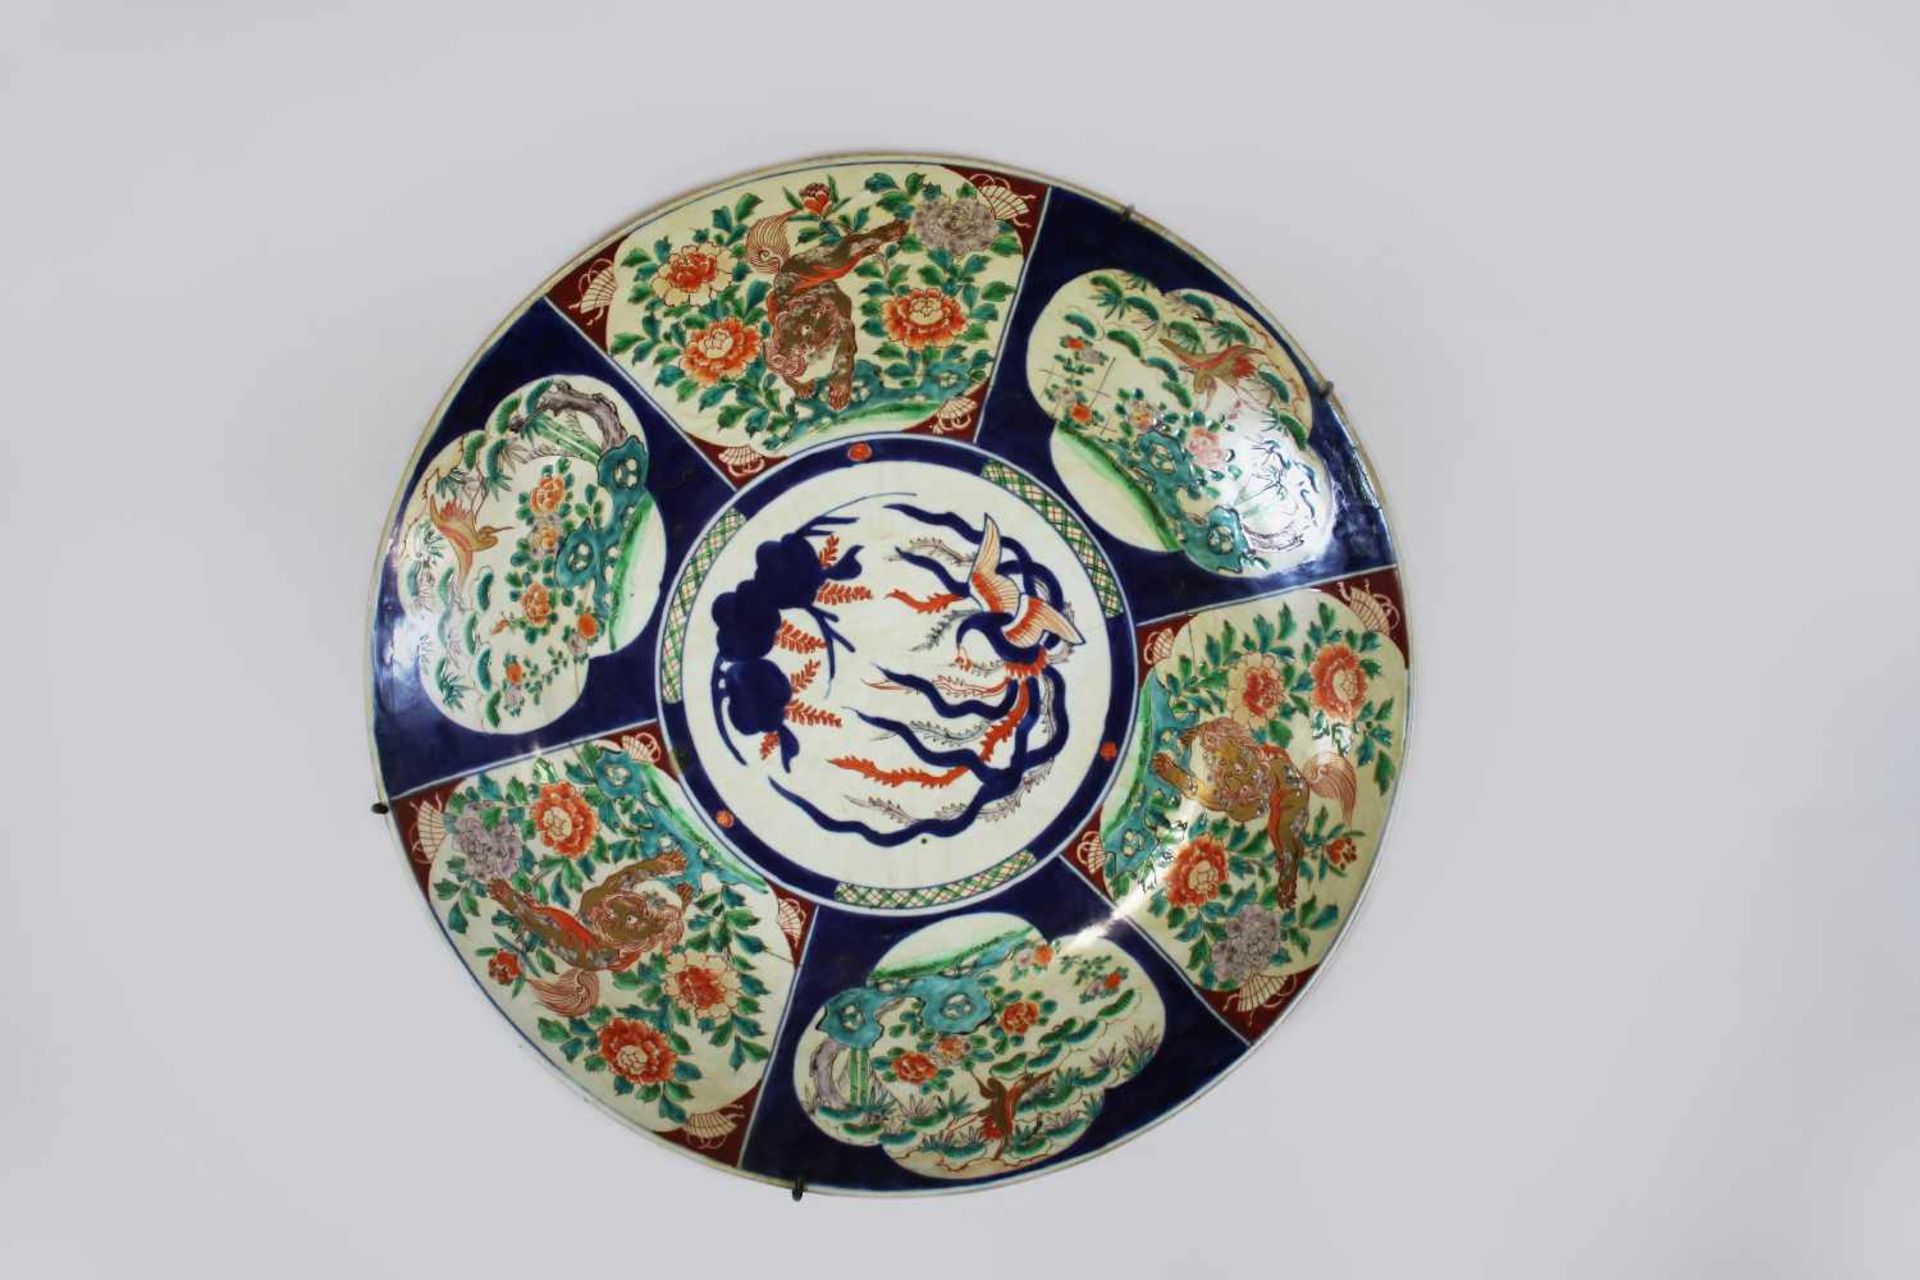 Großer Imari Porzellanteller, China, polychrom bemalt, Fu-Hund und Vogel Motiv, floraler Dekor